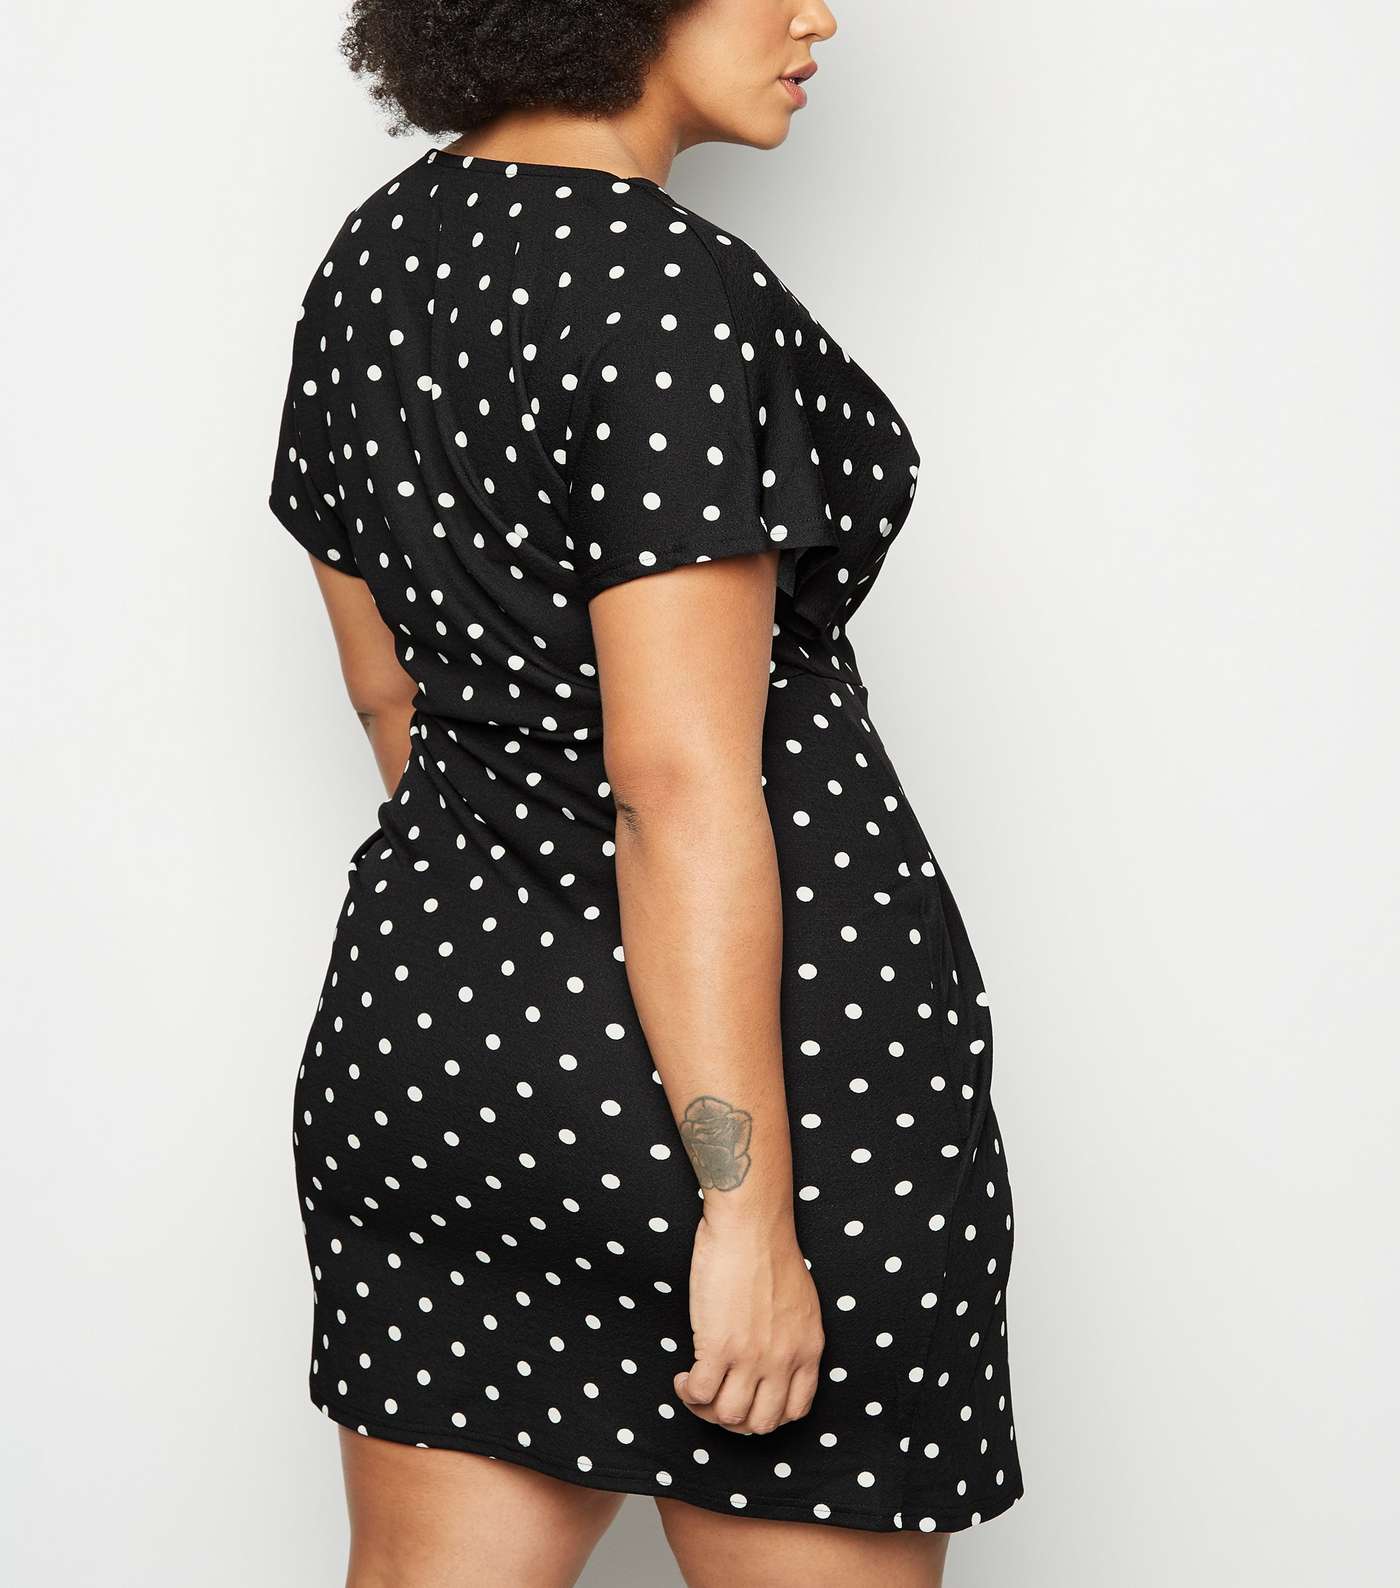 Mela Curves Black Polka Dot Wrap Dress Image 3